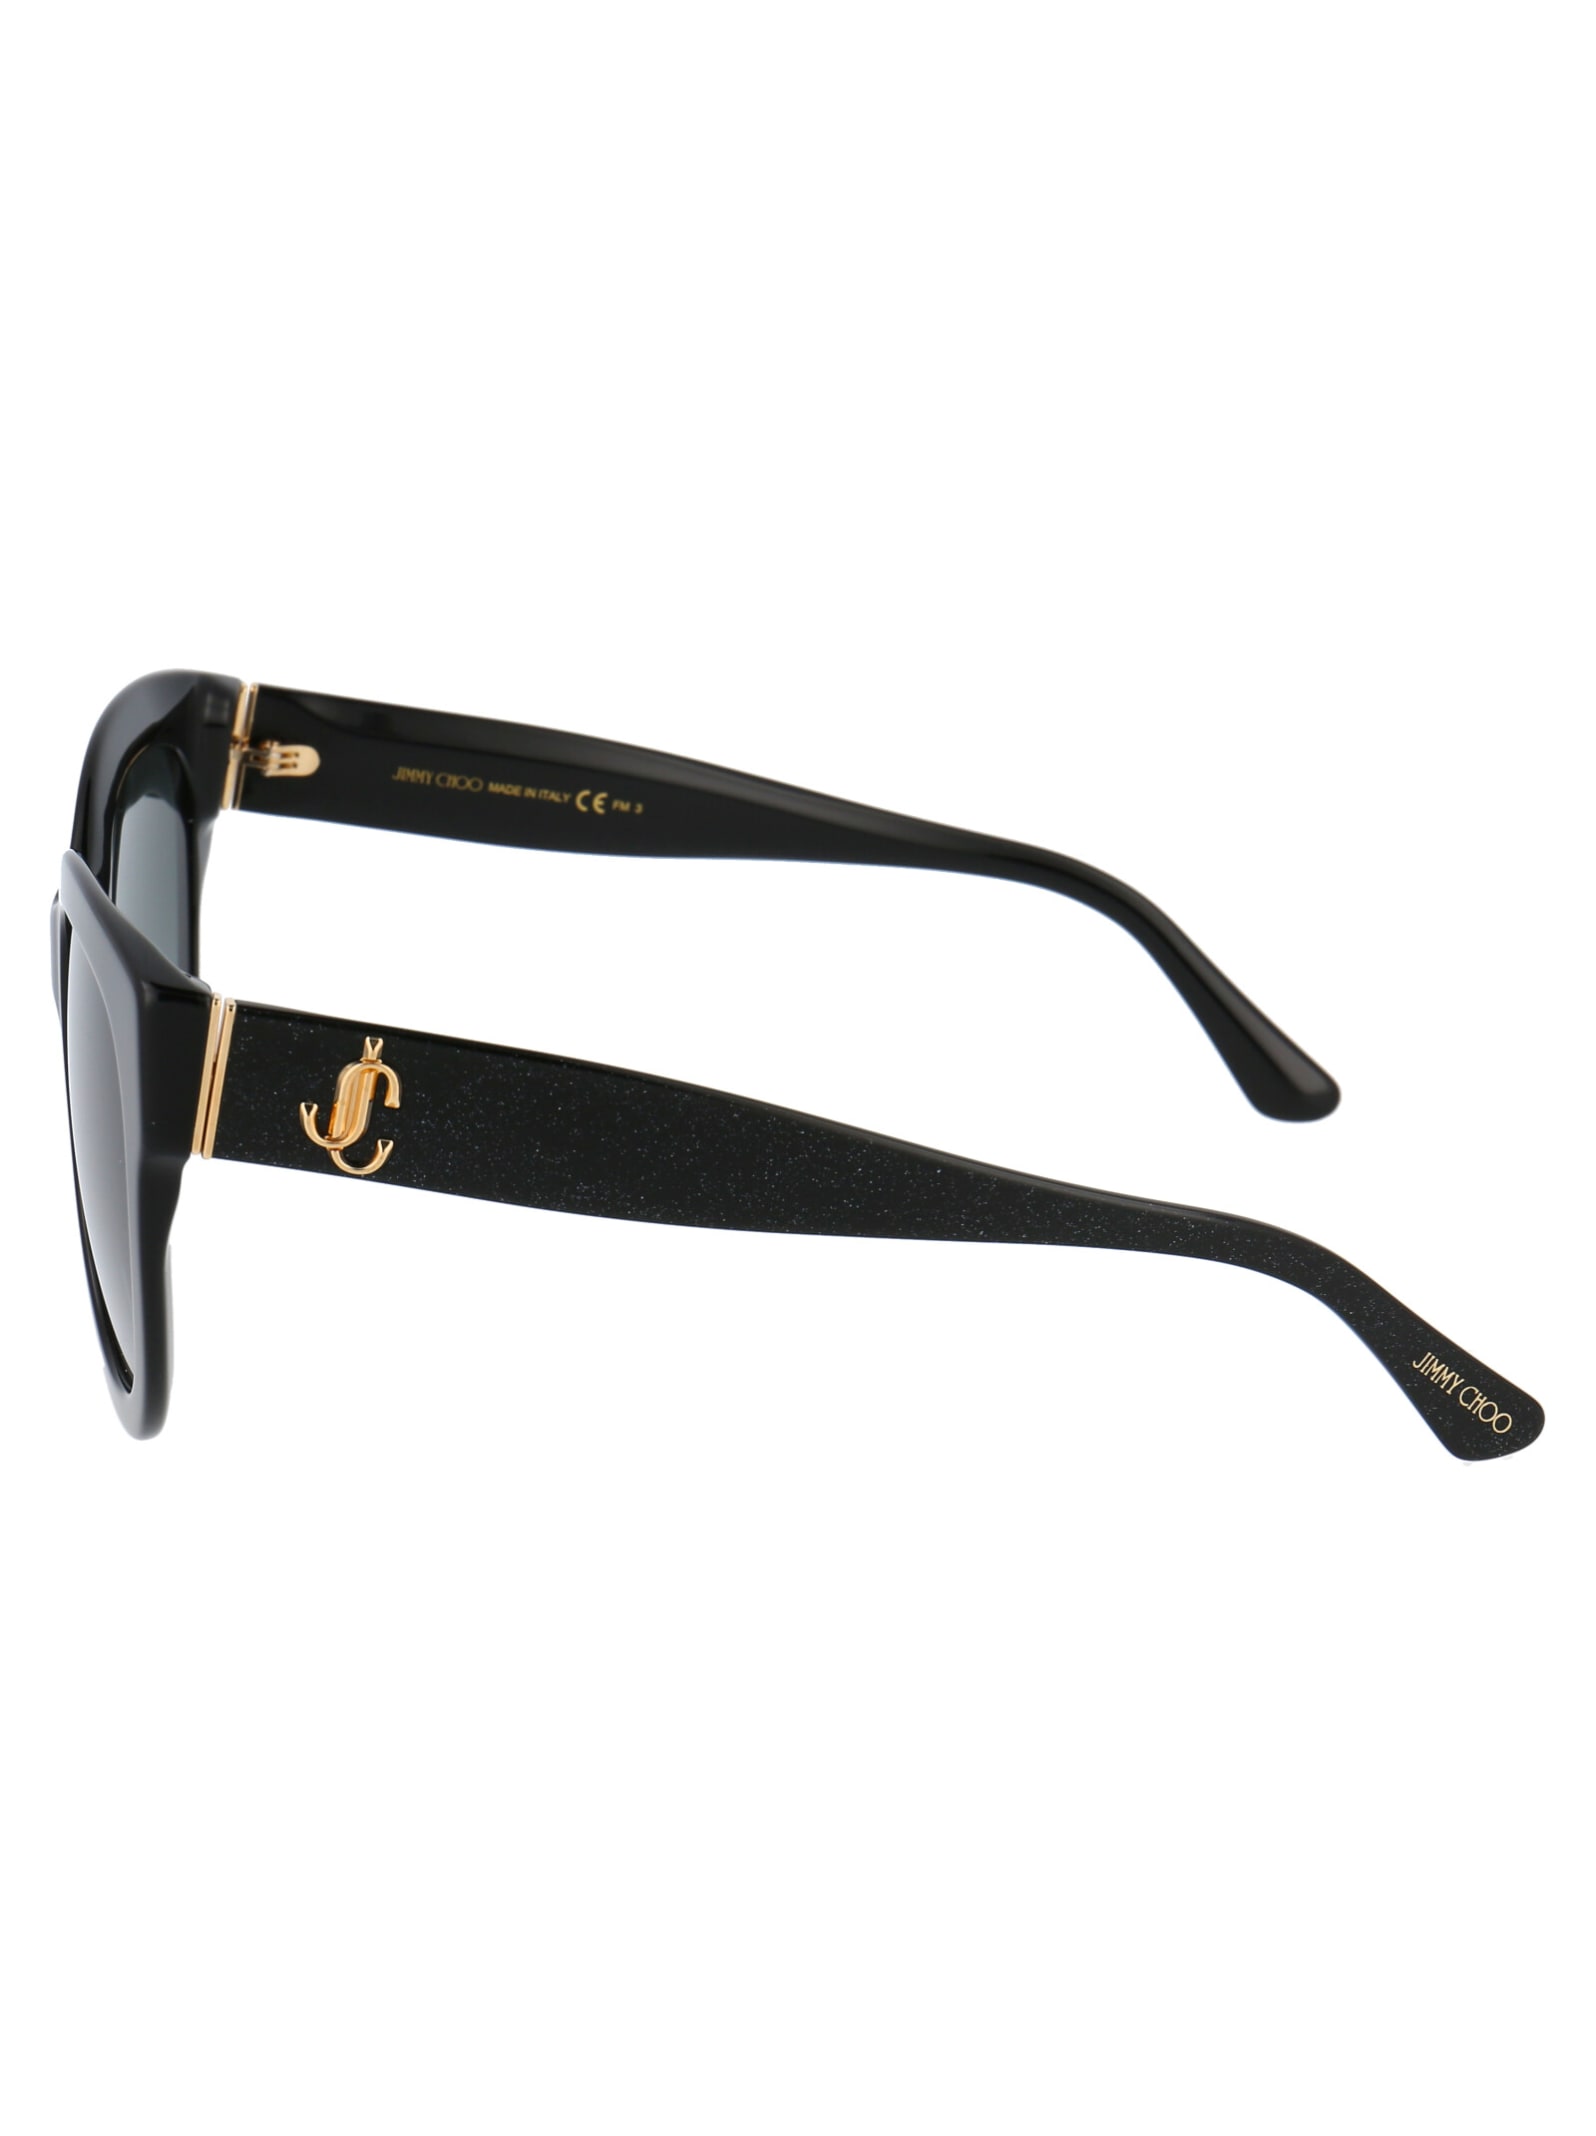 Shop Jimmy Choo Jill/g/s Sunglasses In Ns89o Black Glitter